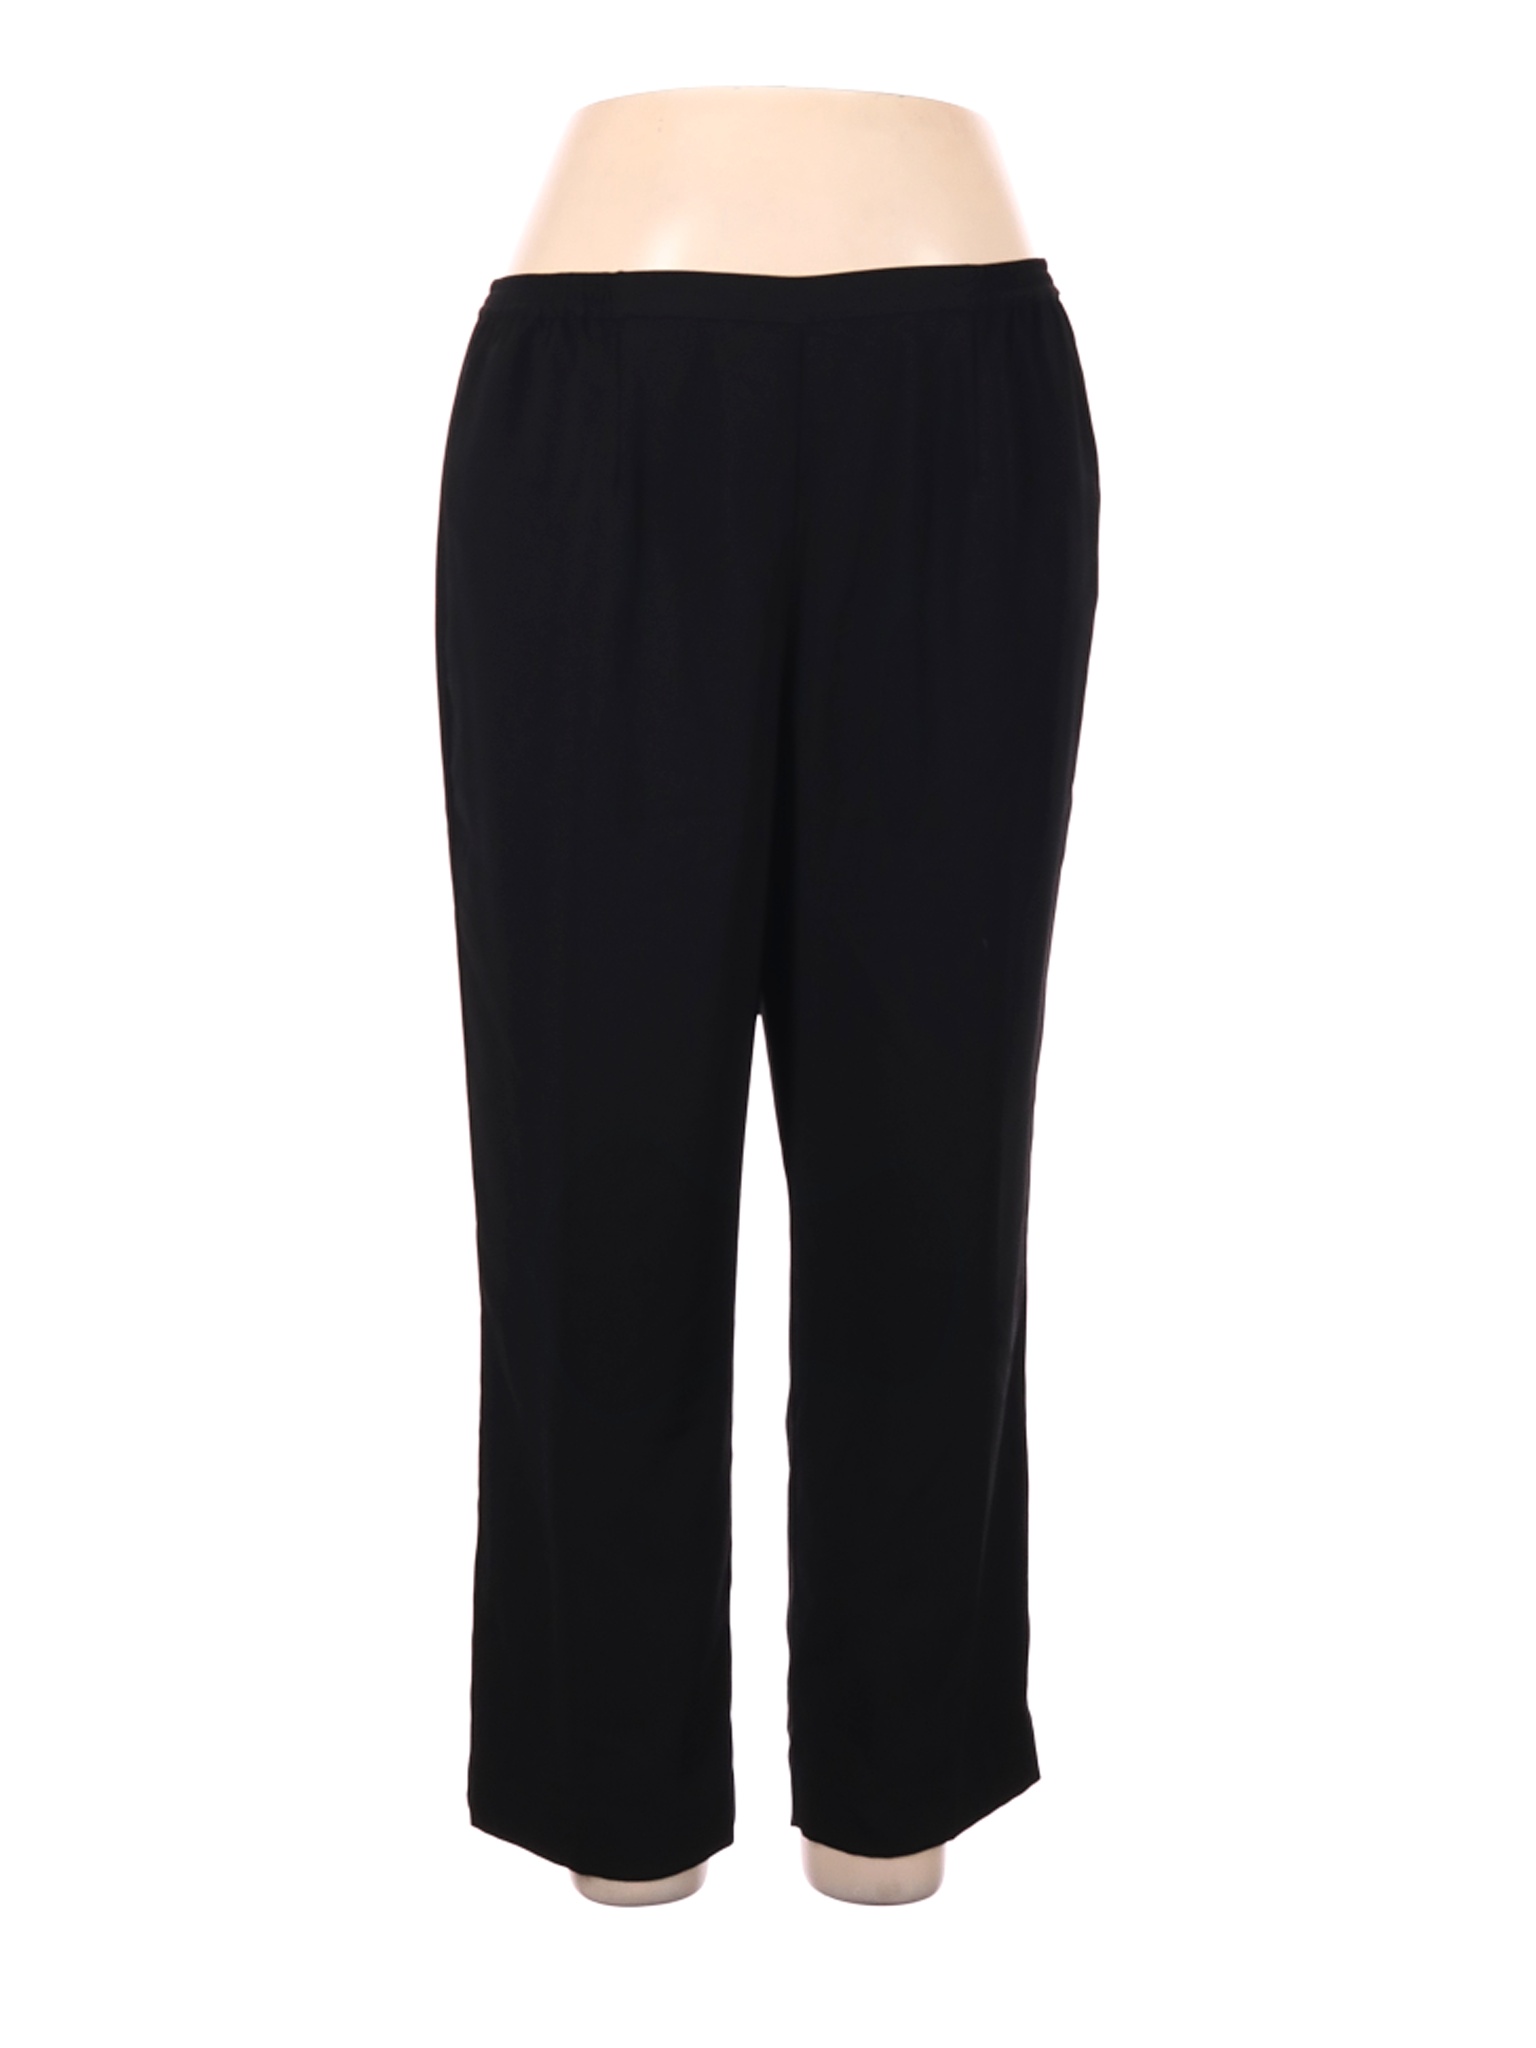 Appleseeds Women Black Dress Pants 18 Plus | eBay